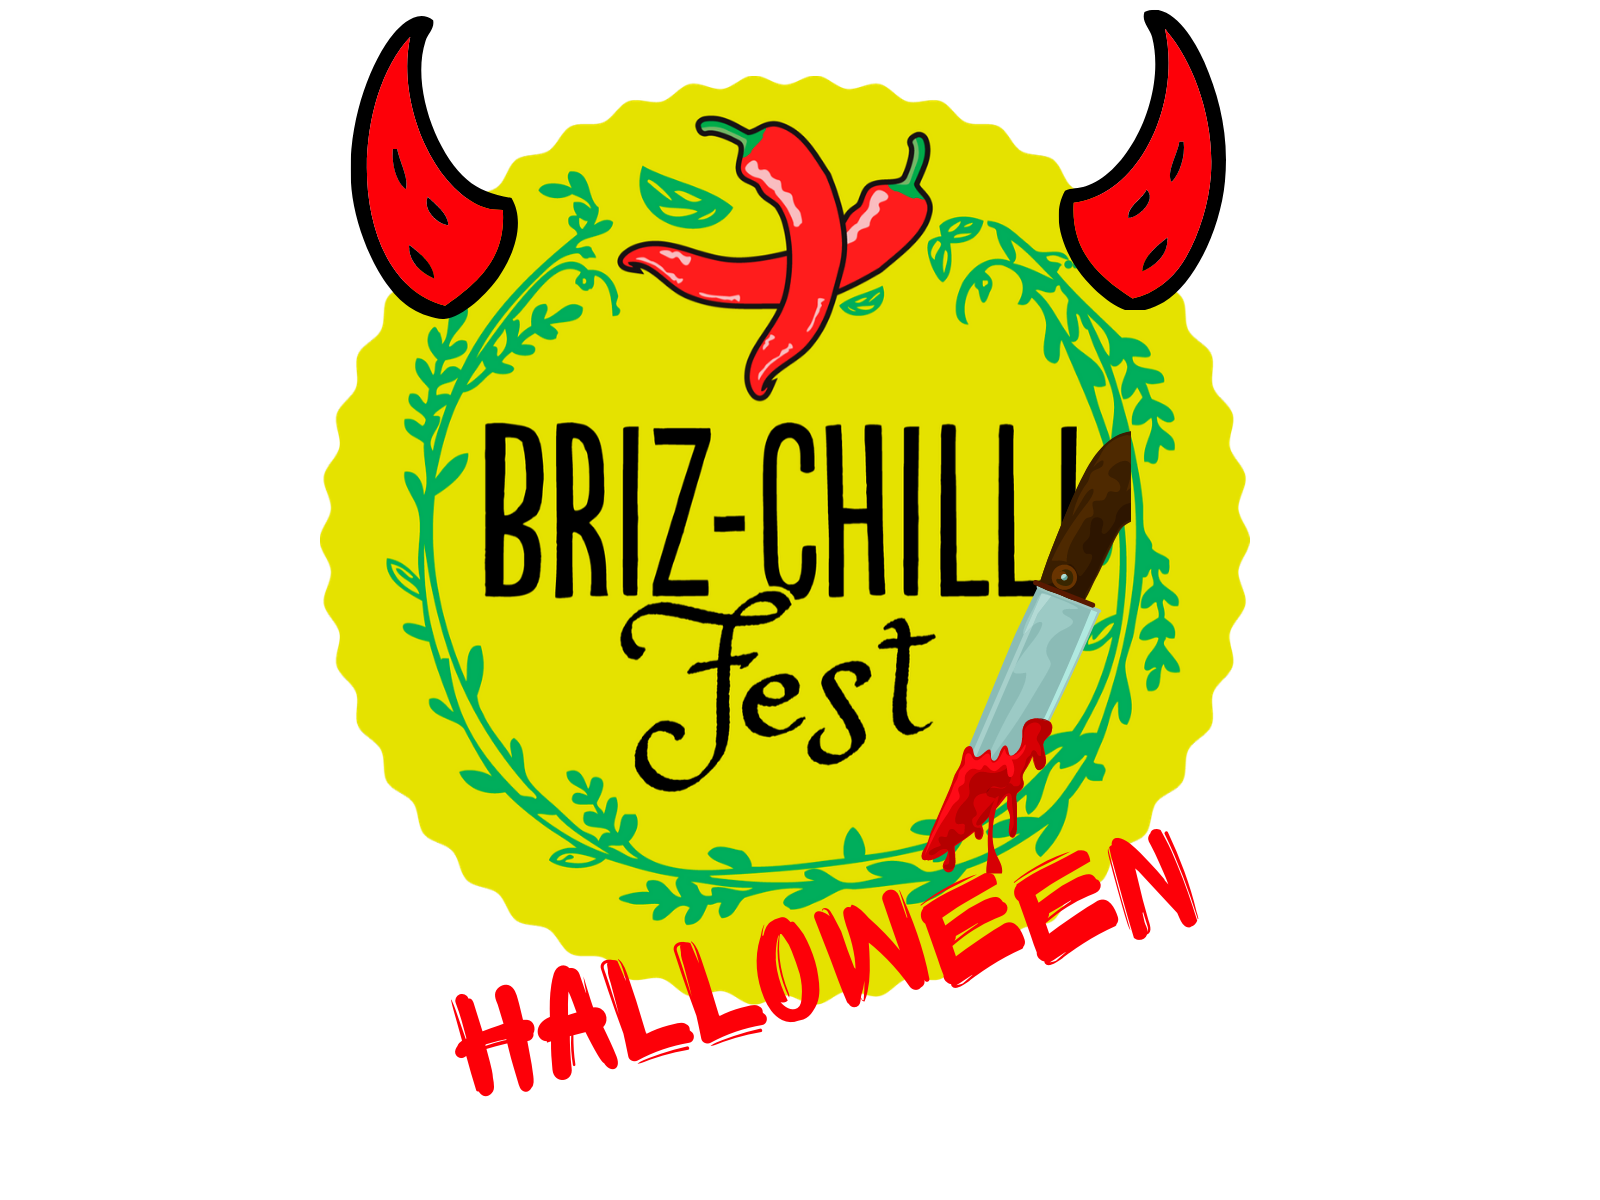 Briz Chilli Fest Halloween